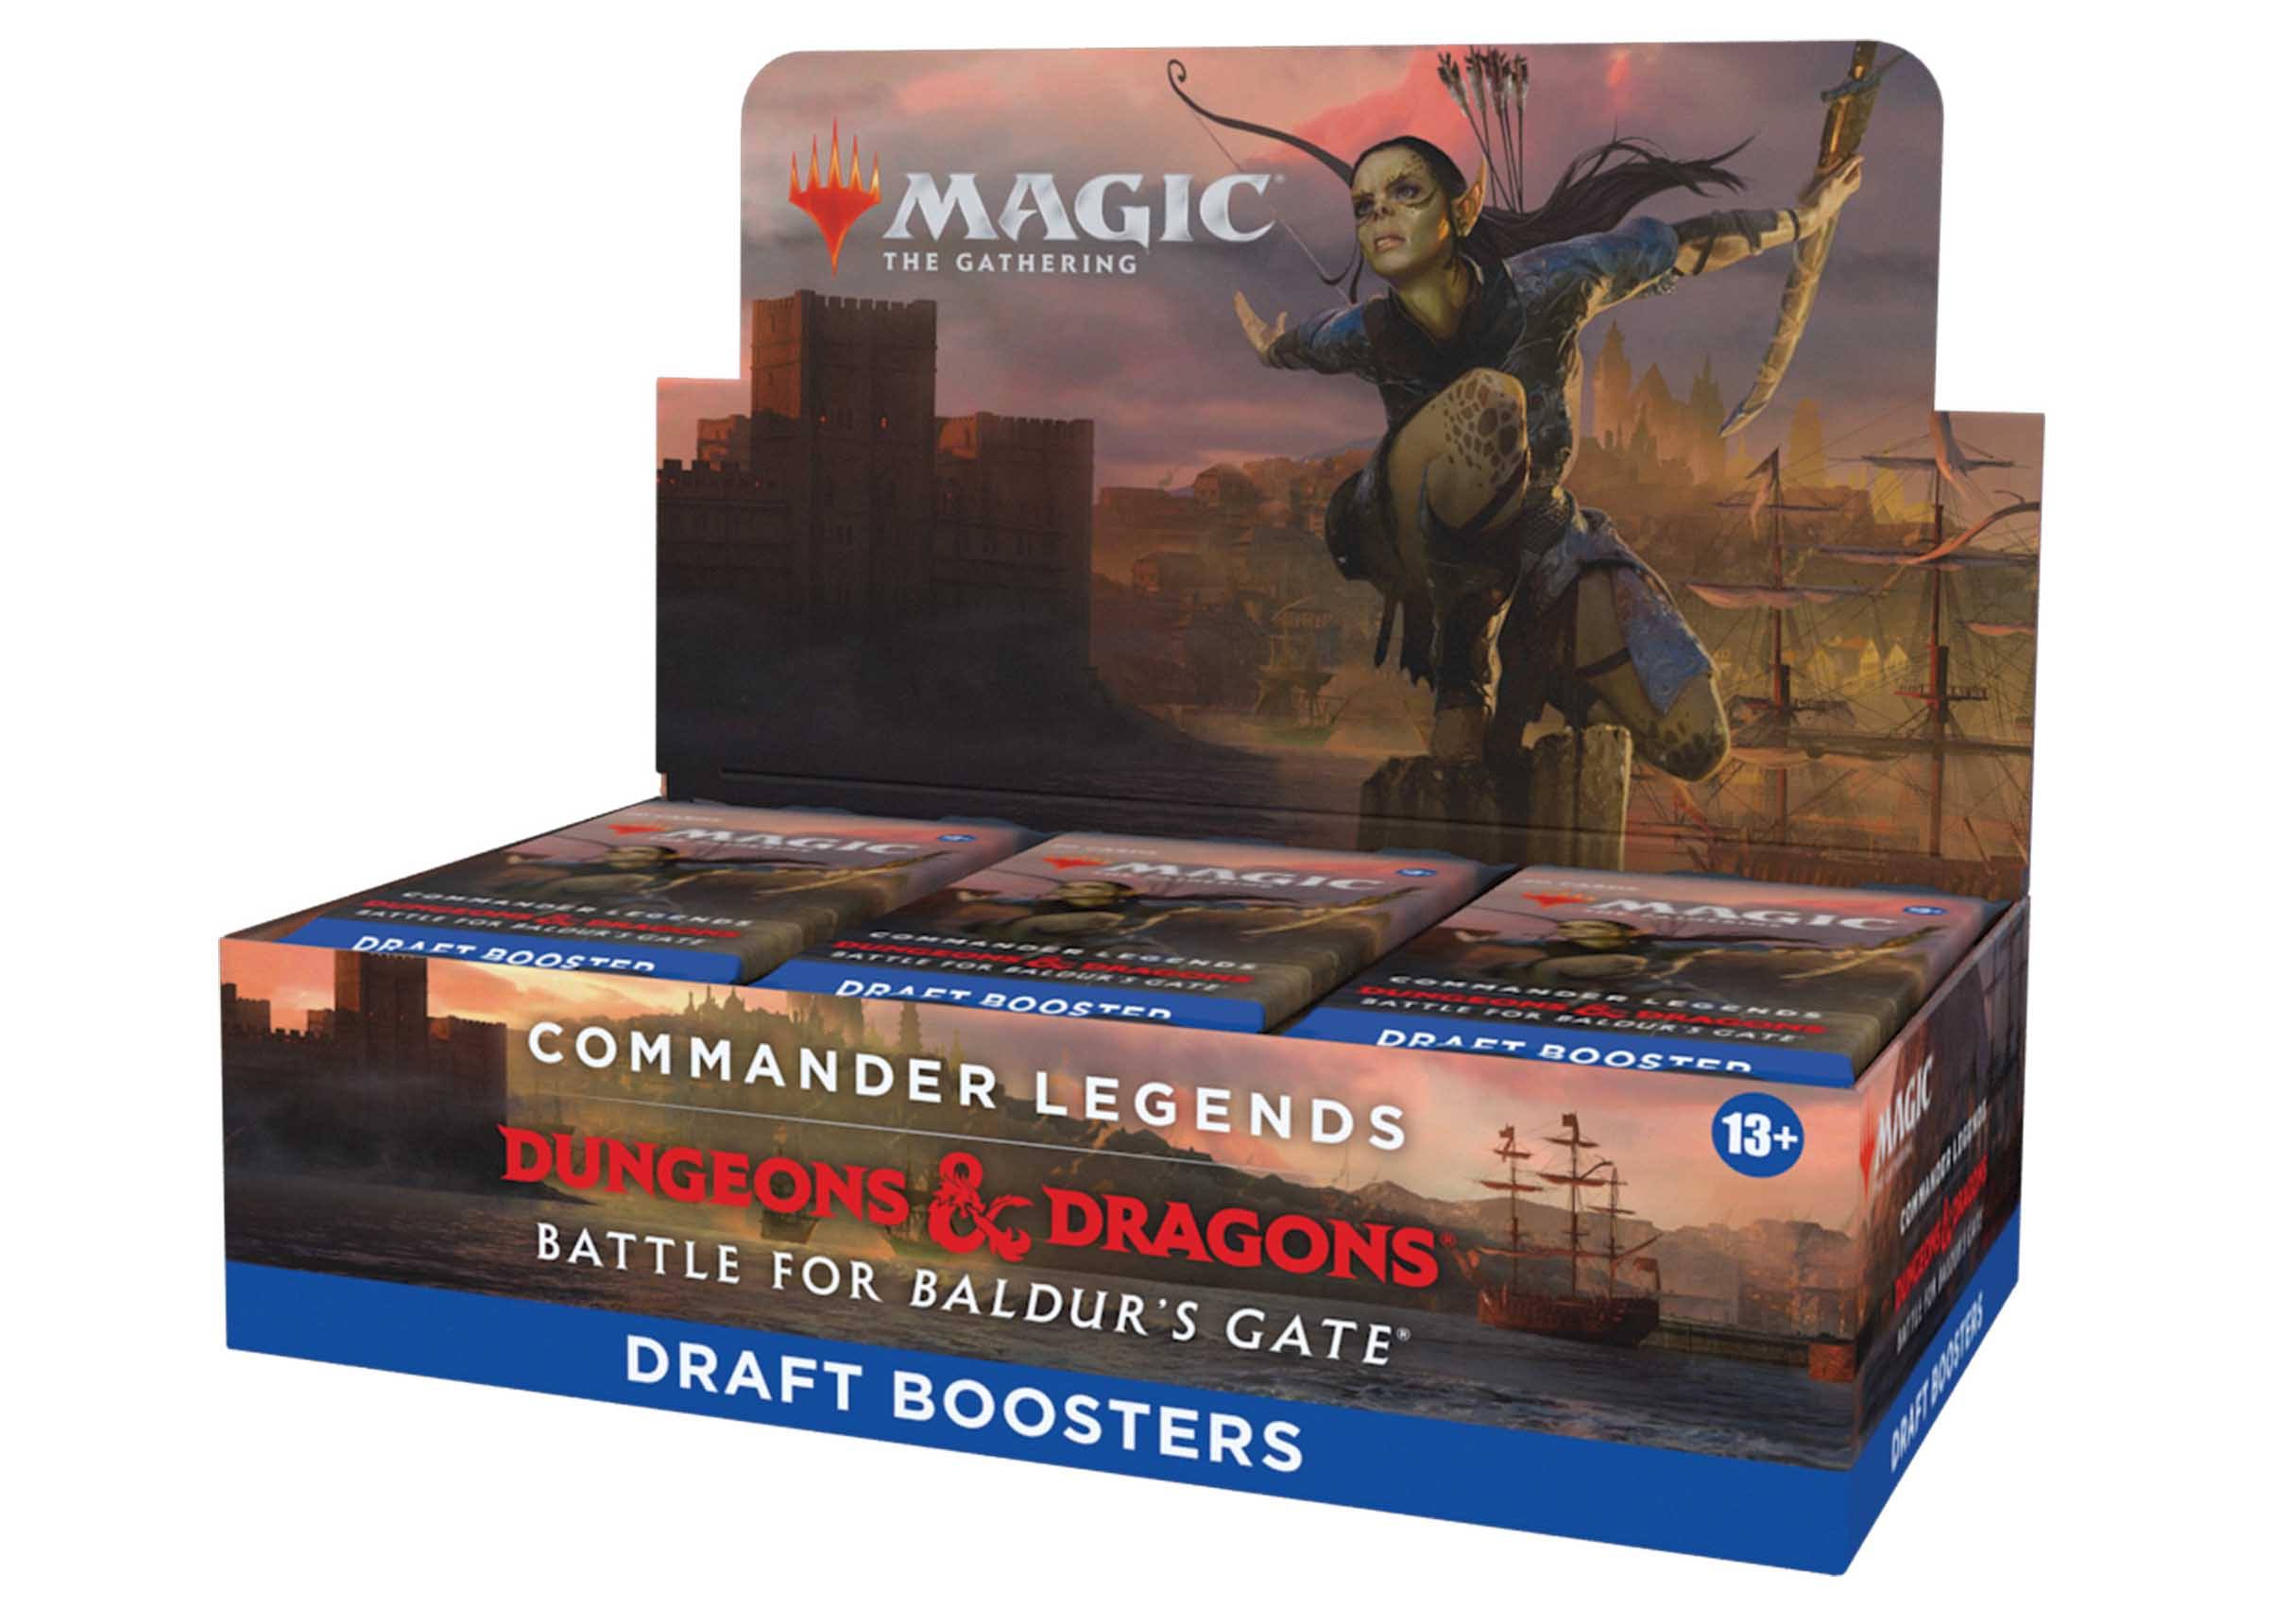 Magic The Gathering - Commander Legends: Battle for Baldur's Gate - Draft Booster Box